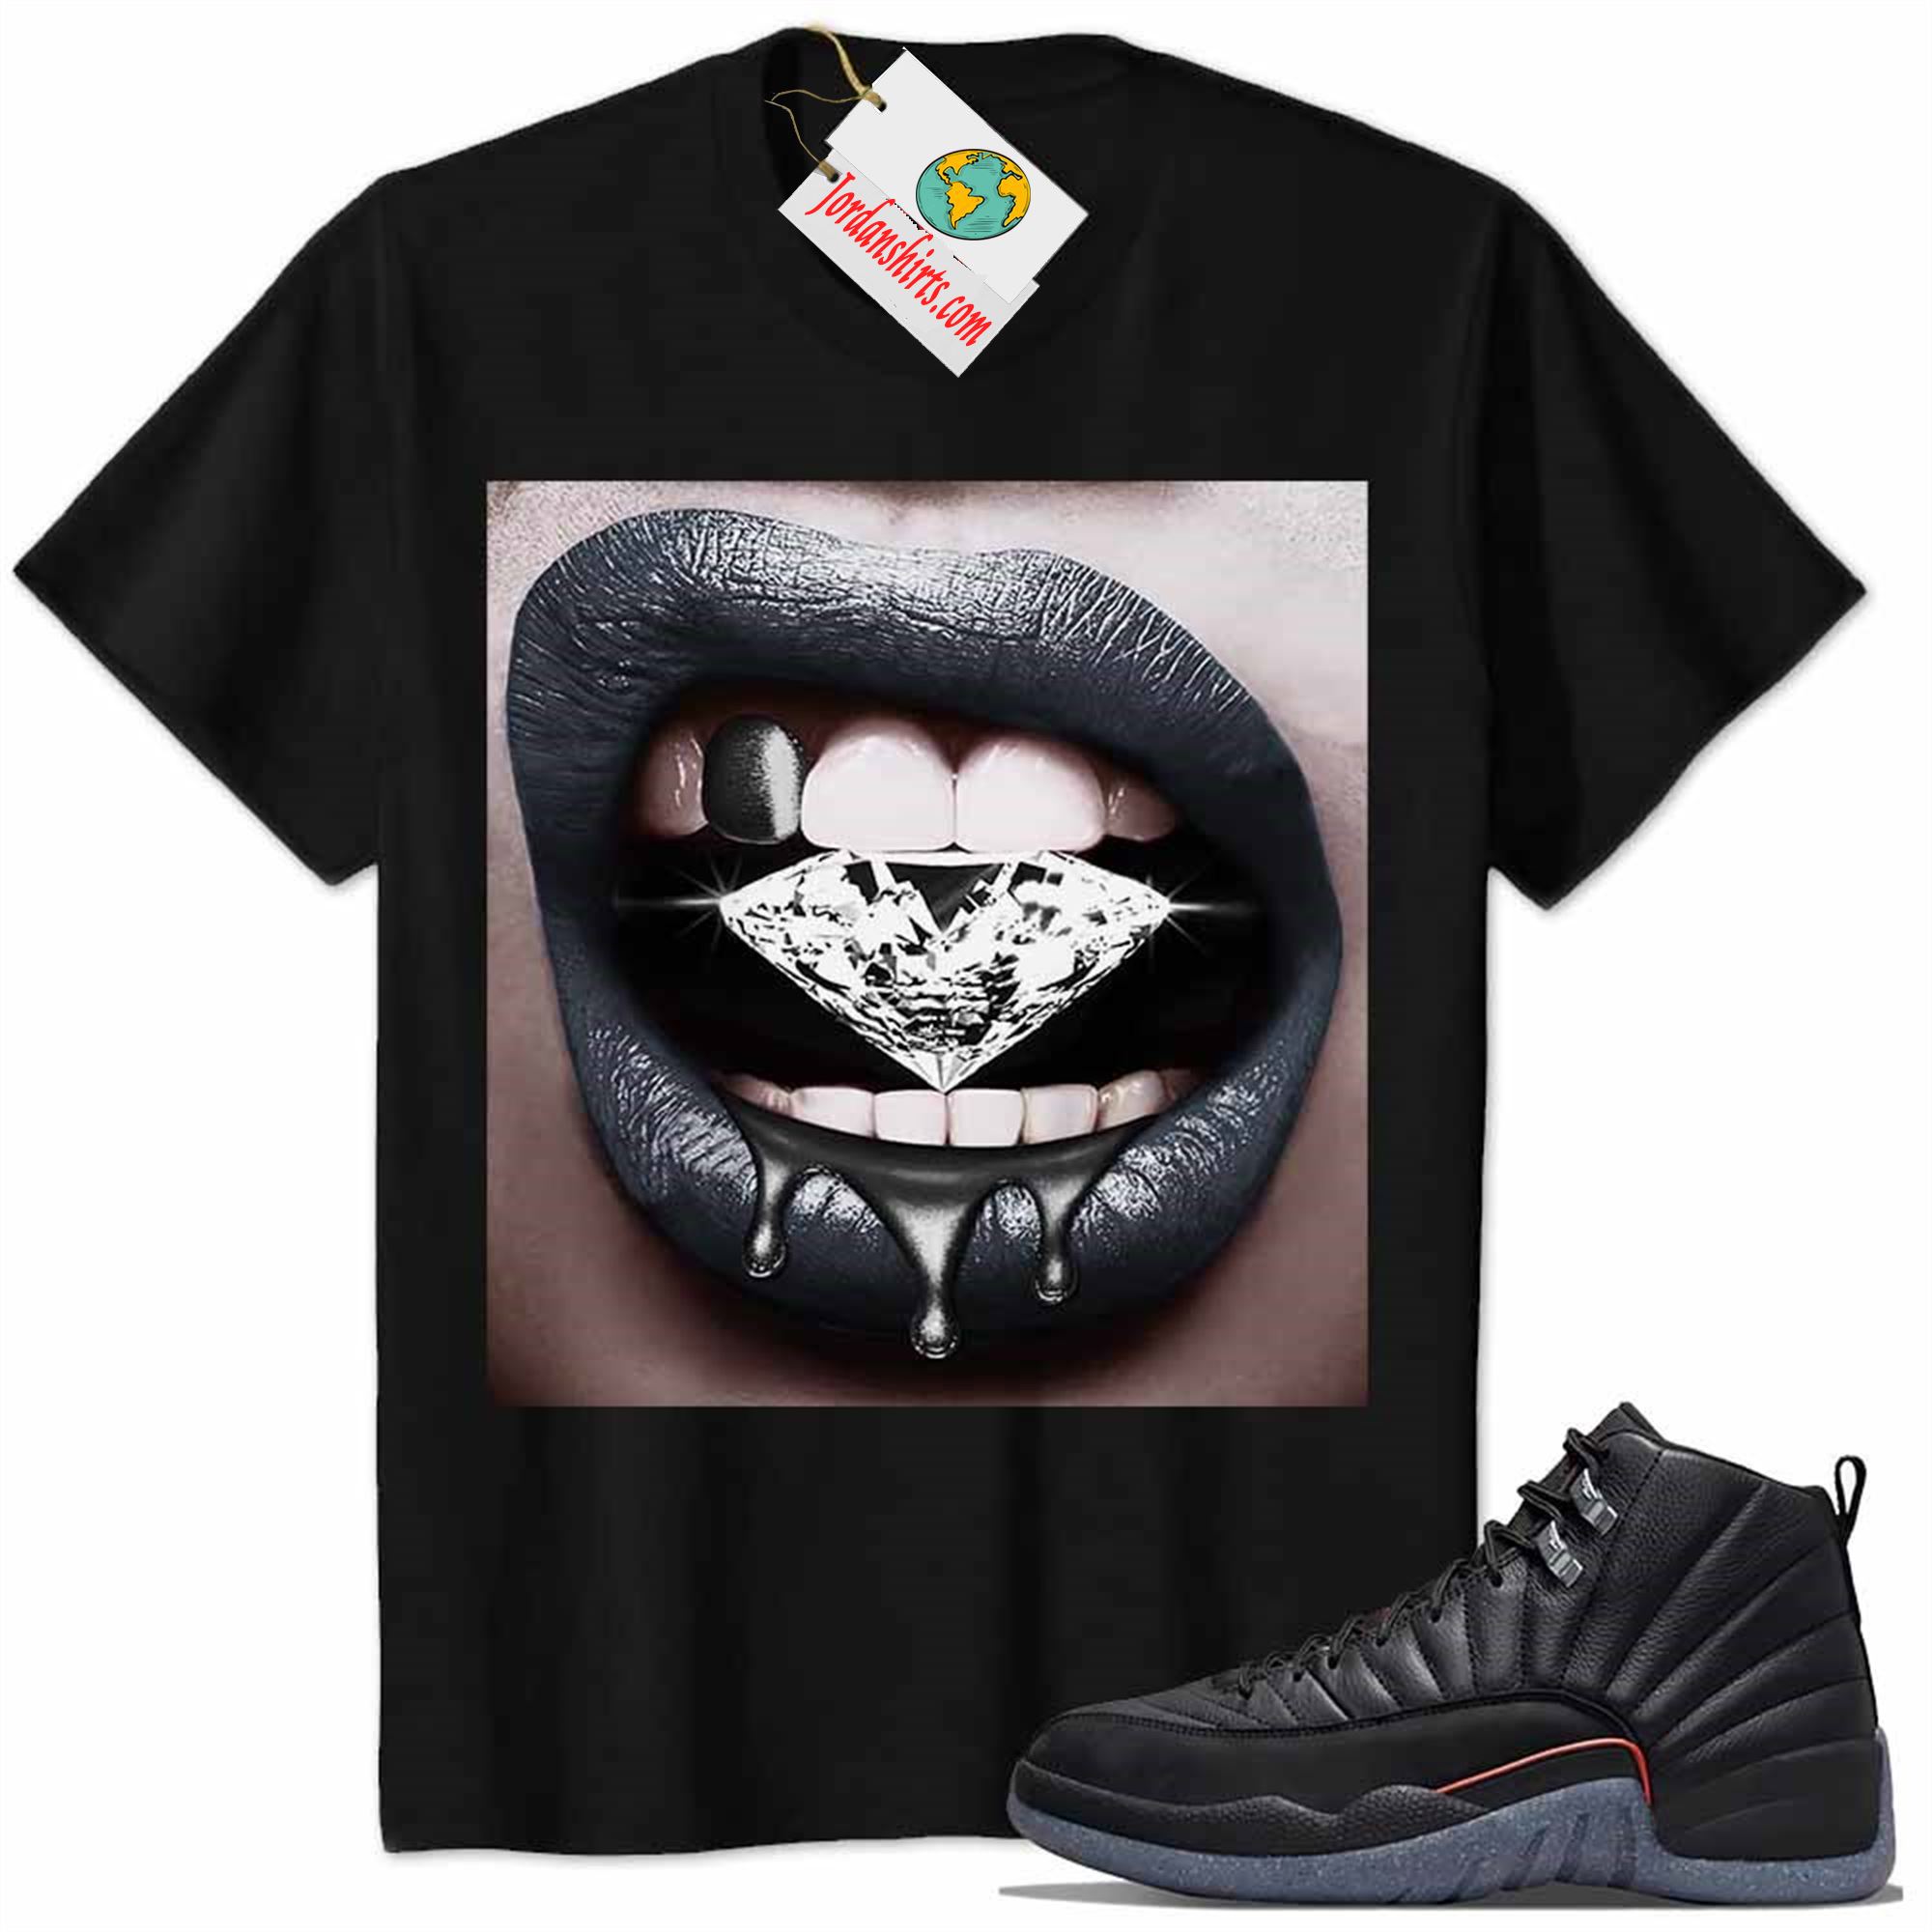 Jordan 12 Shirt, Jordan 12 Utility Grind Shirt Sexy Lip Bite Diamond Dripping Black Full Size Up To 5xl